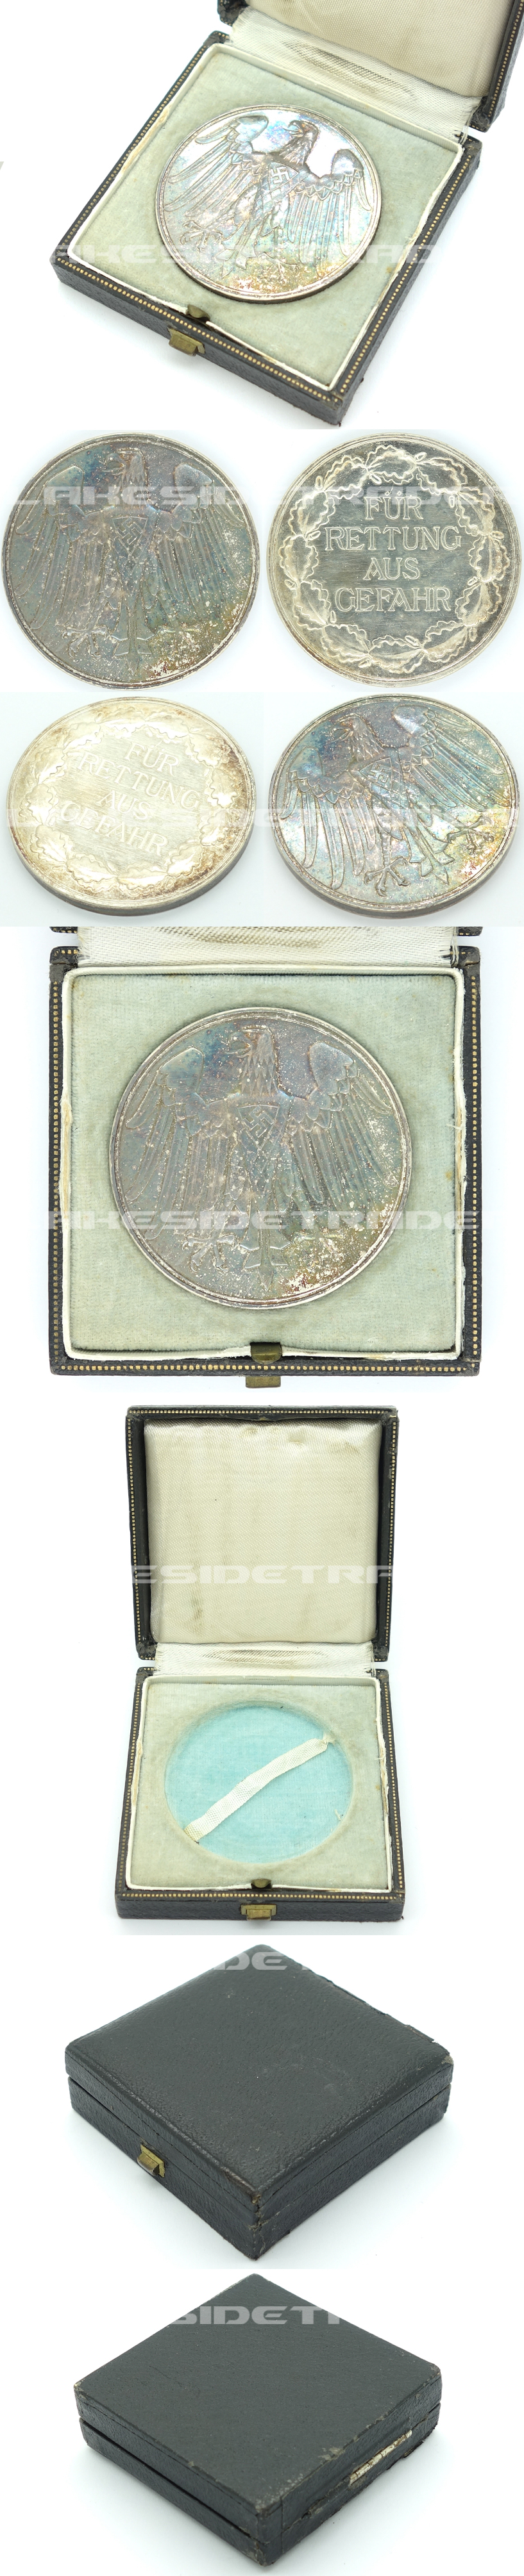 Cased Commemorative Medal for Rescue from Danger 1933